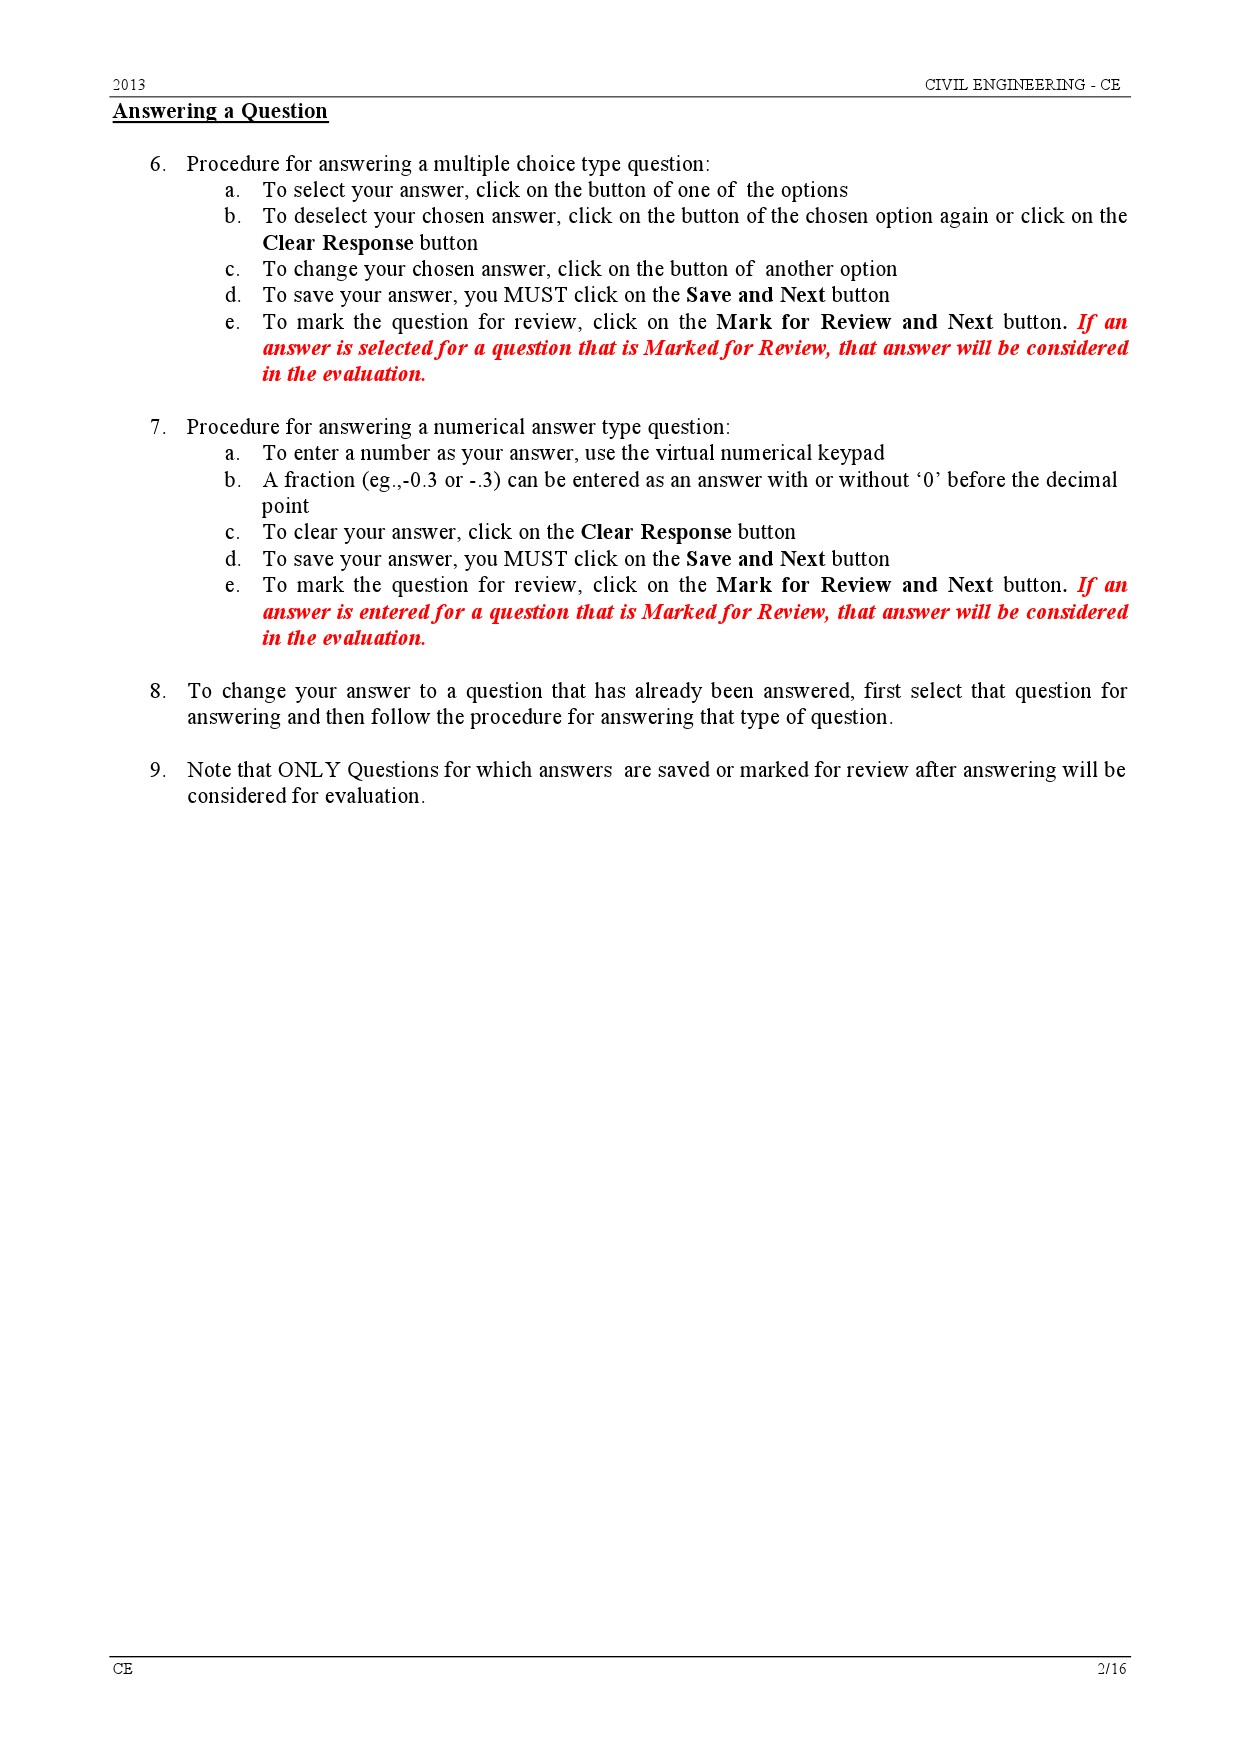 GATE Exam Question Paper 2013 Civil Engineering 2